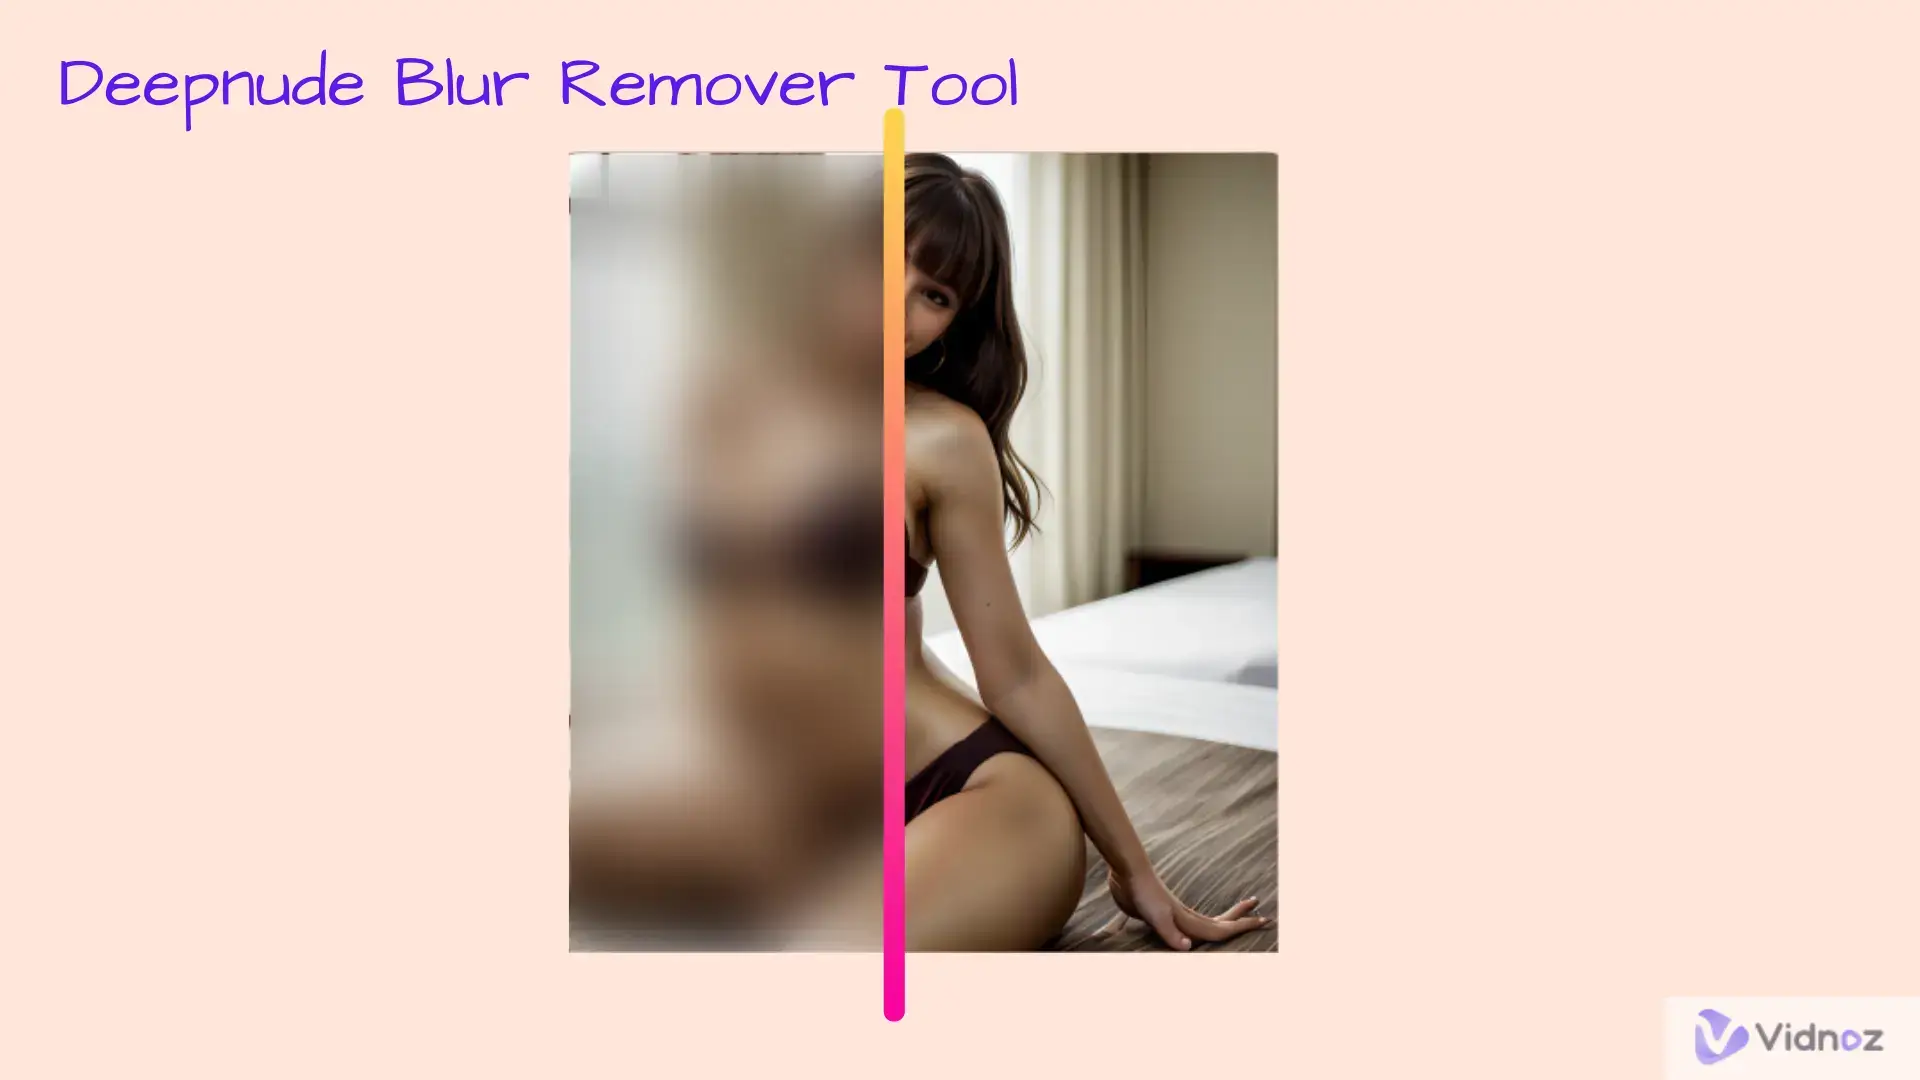 Unblur Deepnude Images via Top 4 Practical Online Deepnude Blur Remover Tools and MORE